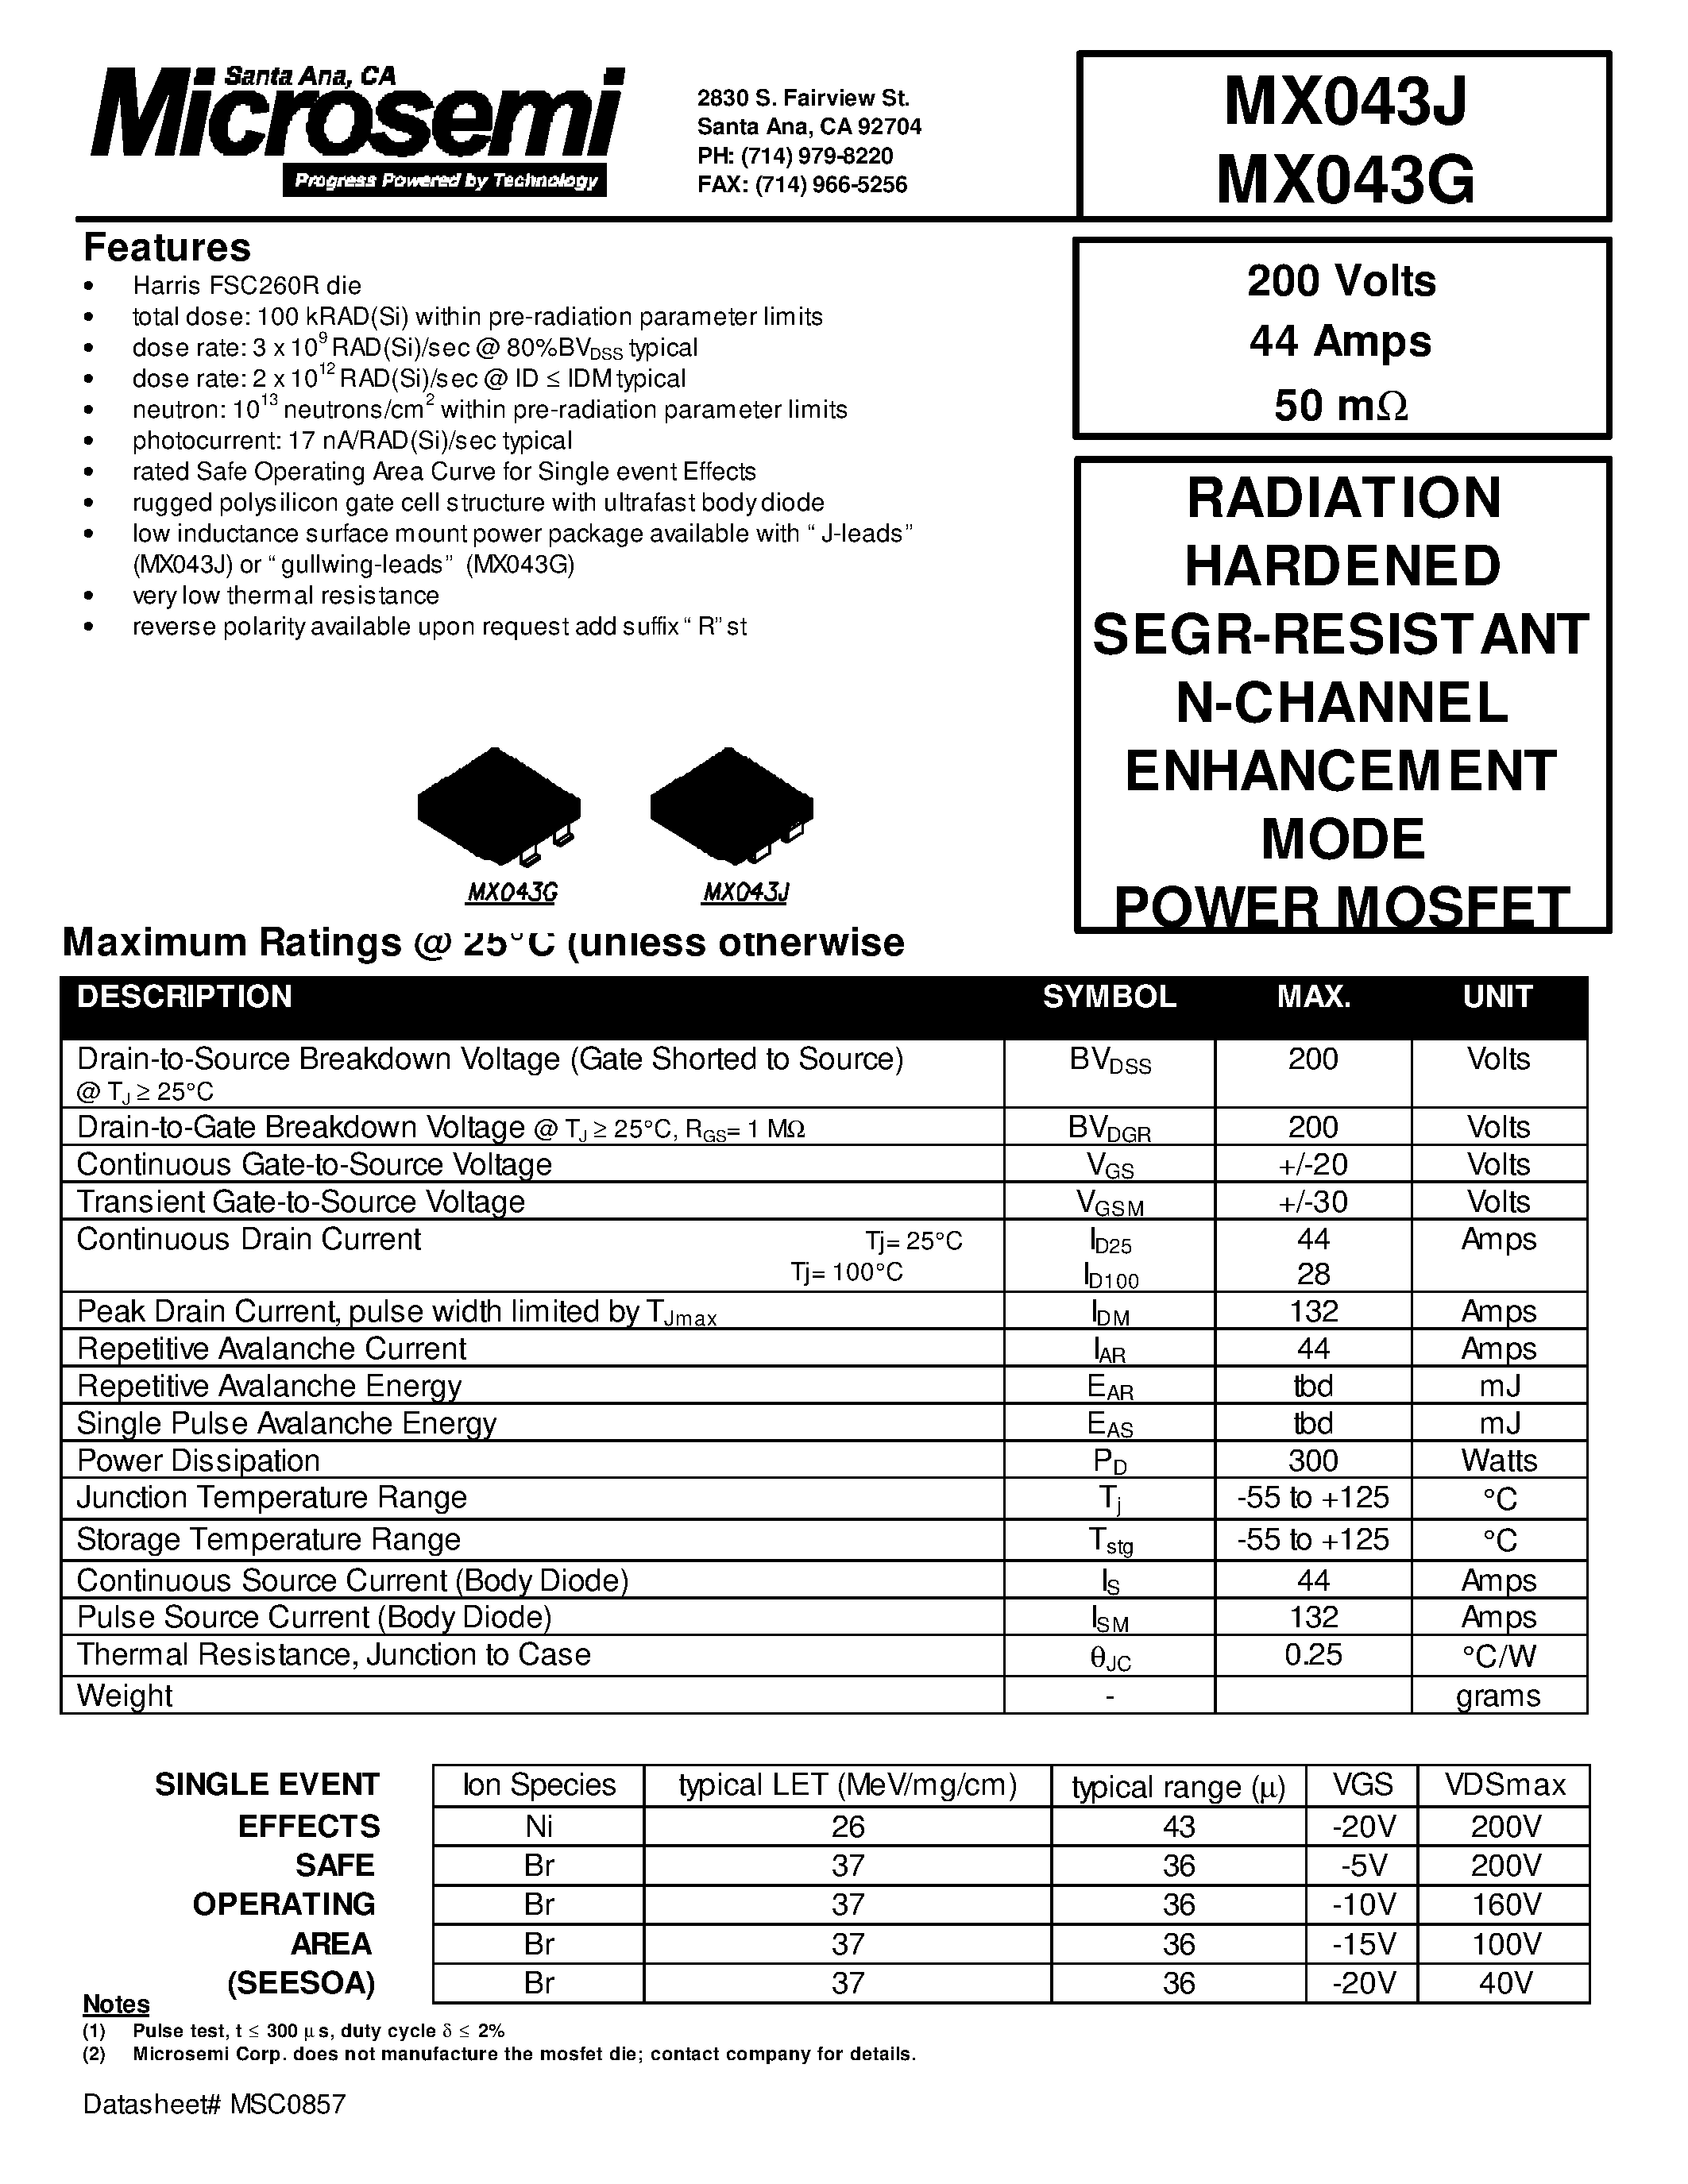 Даташит MX043 - RADIATION HARDENED SEGR-RESISTANT N-CHANNEL ENHANCEMENT MODE POWER MOSFET страница 1